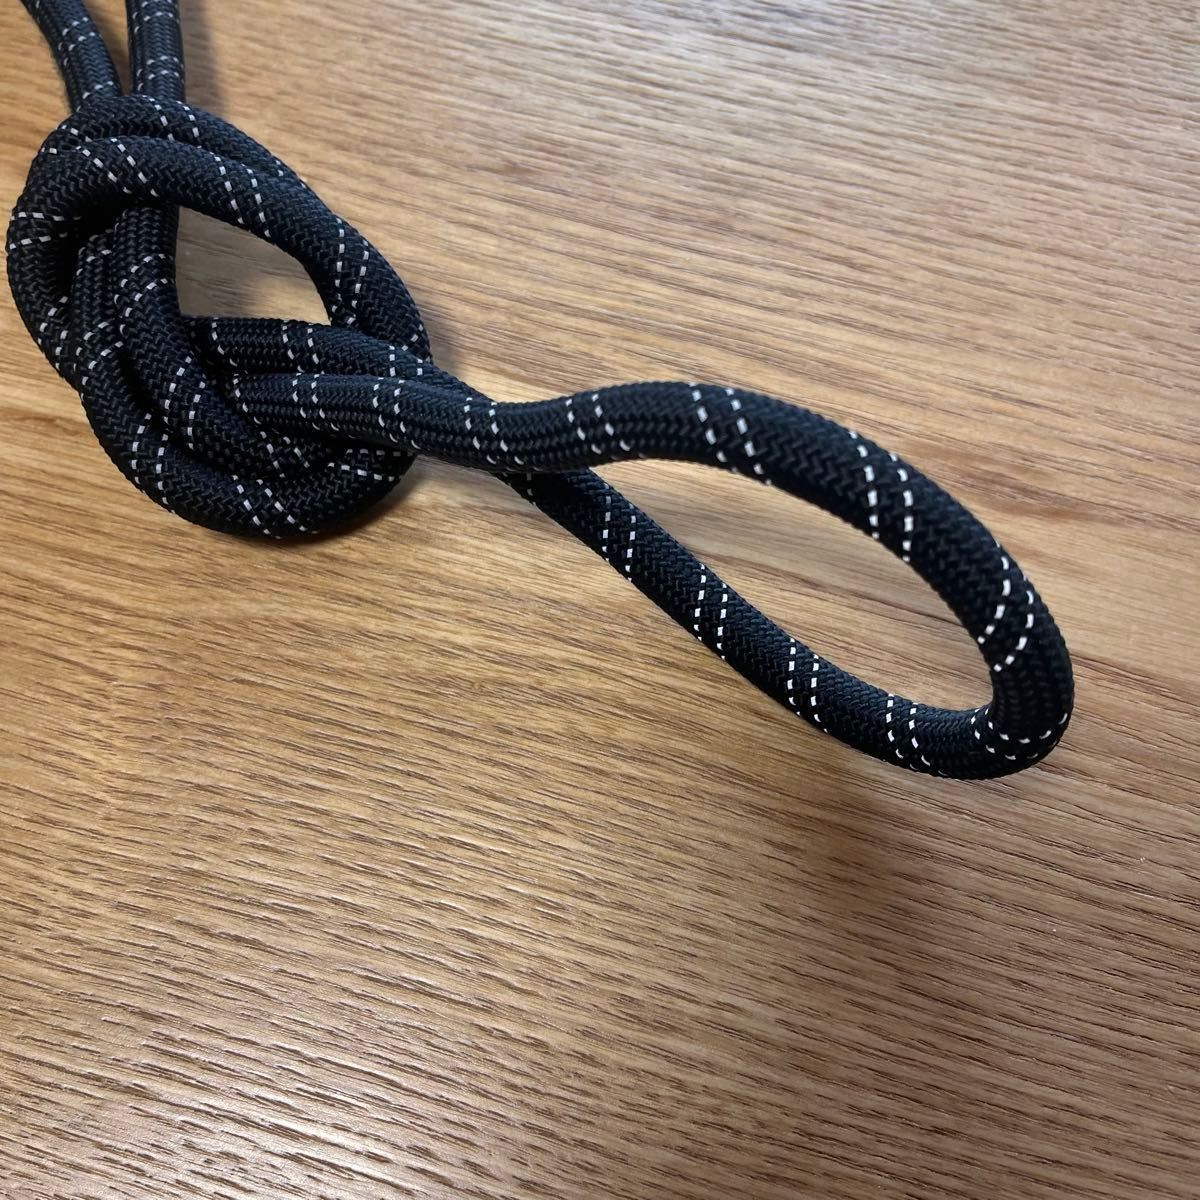 topologie(トポロジー)10mm Rope【ストラップ単体】ブラック